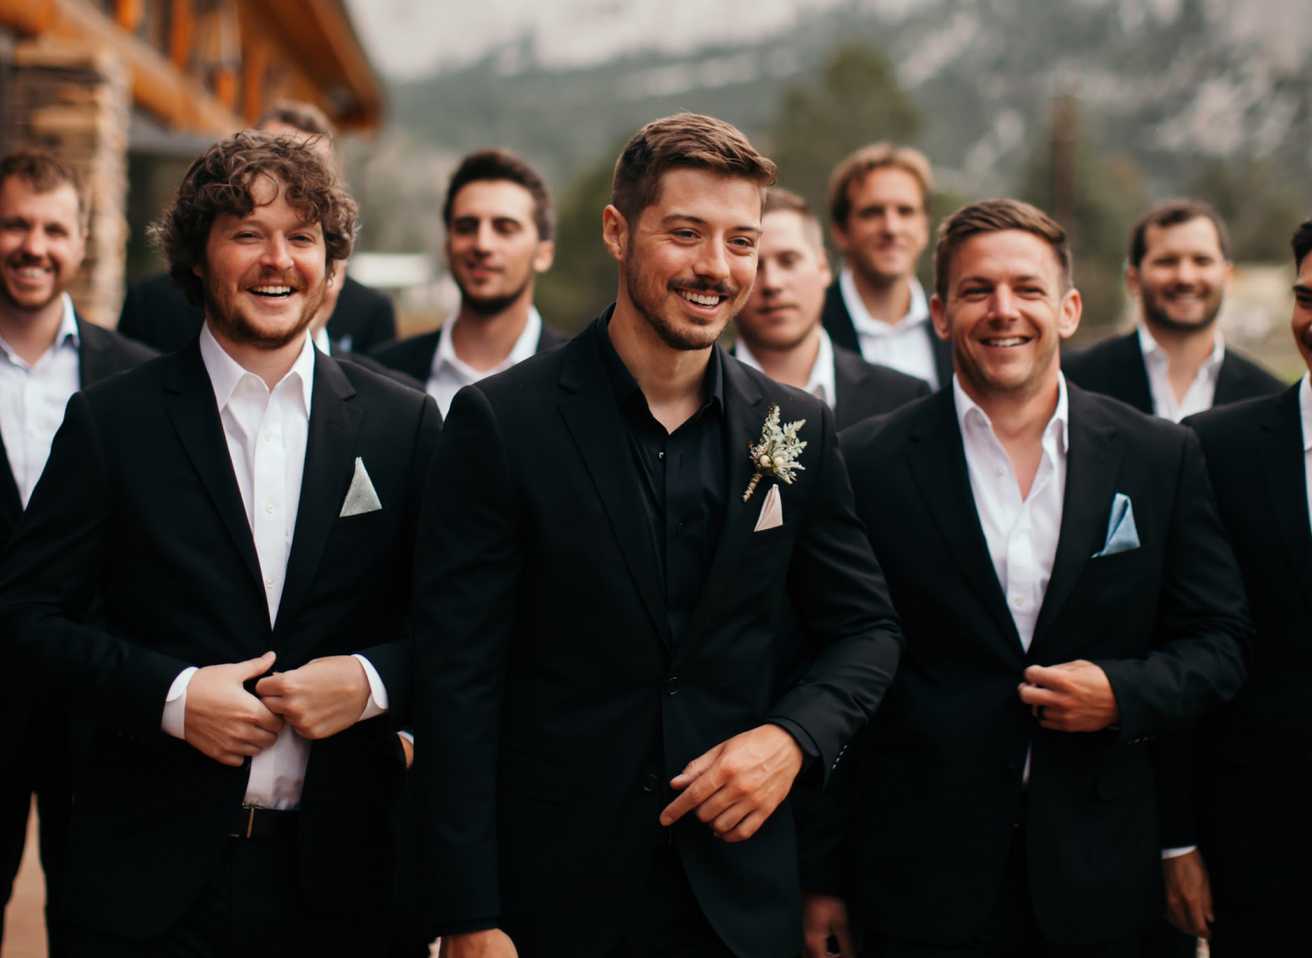 A groom walks with his groomsmen in SuitShop's classic black suits.